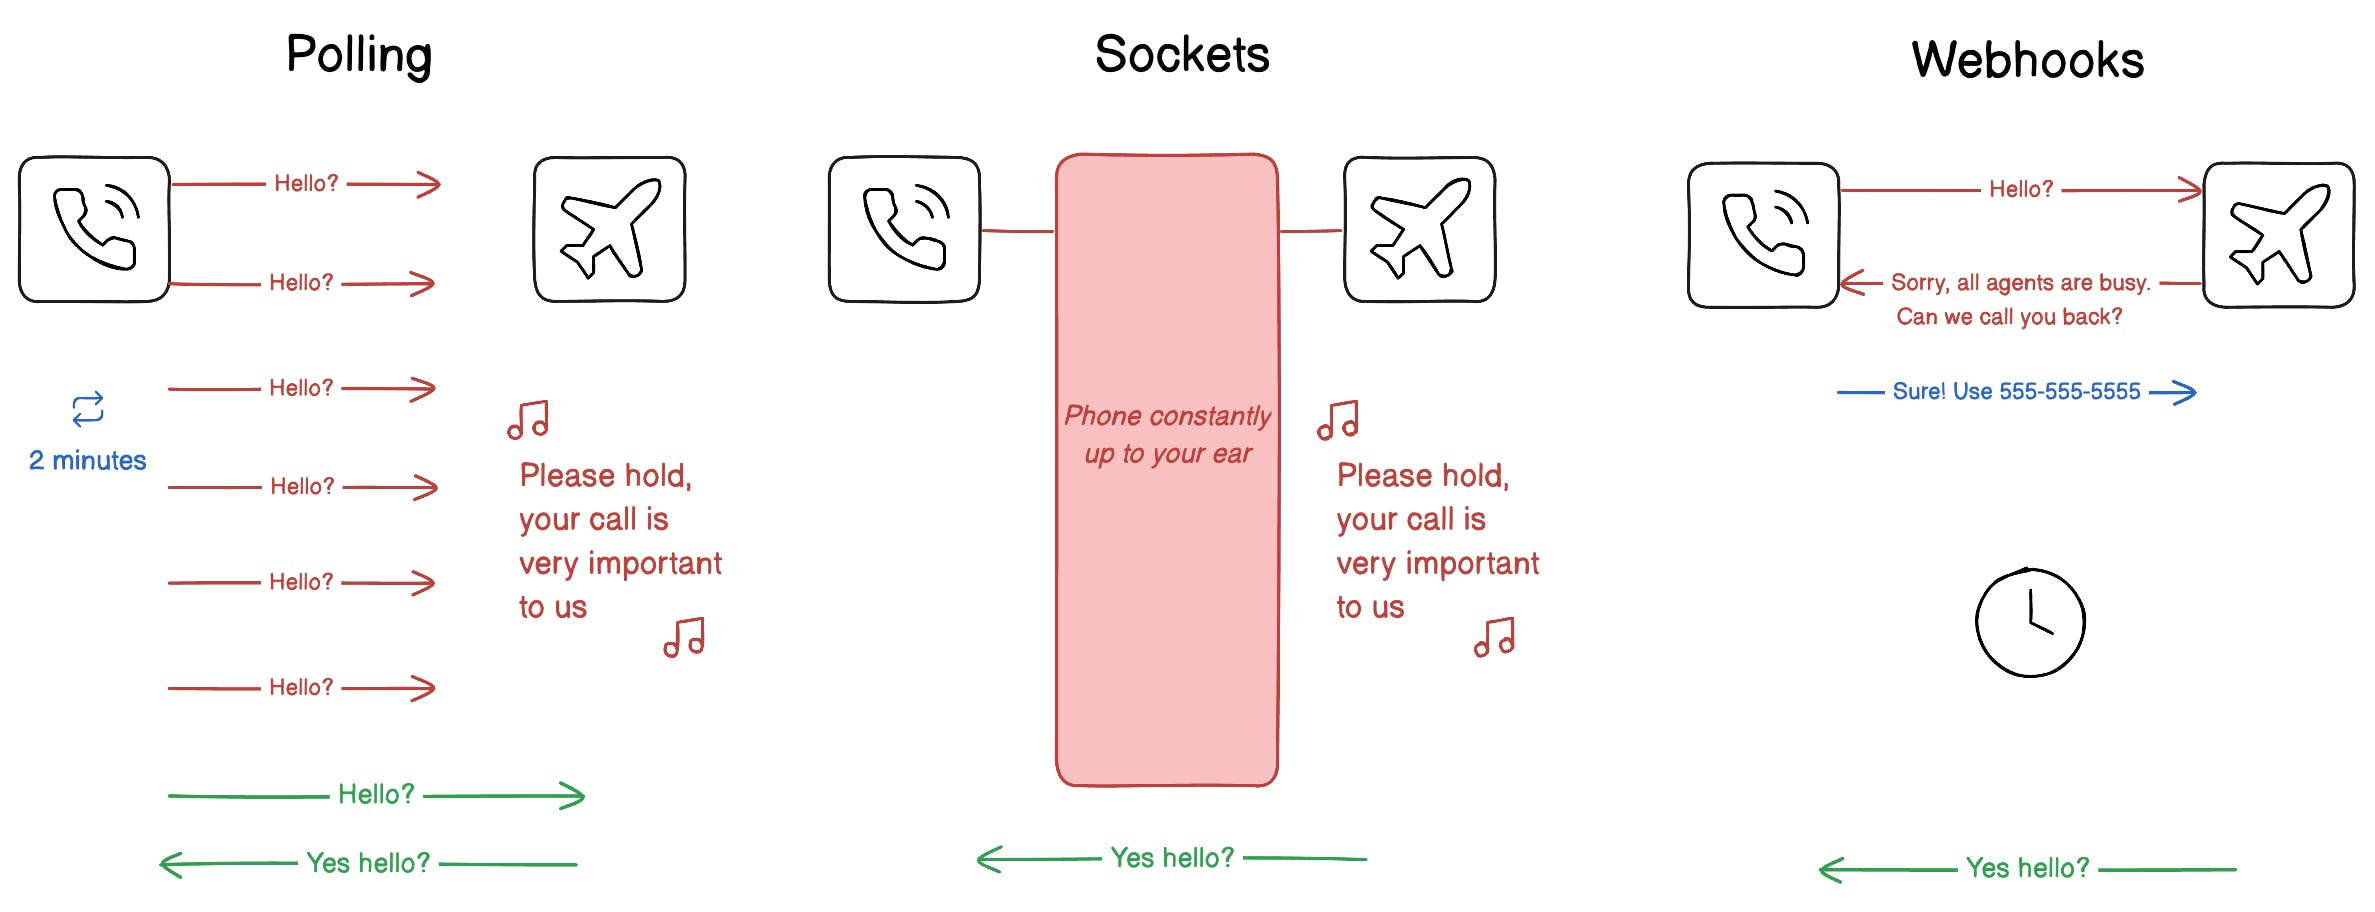 An image displaying polling vs. sockets vs. webhooks.